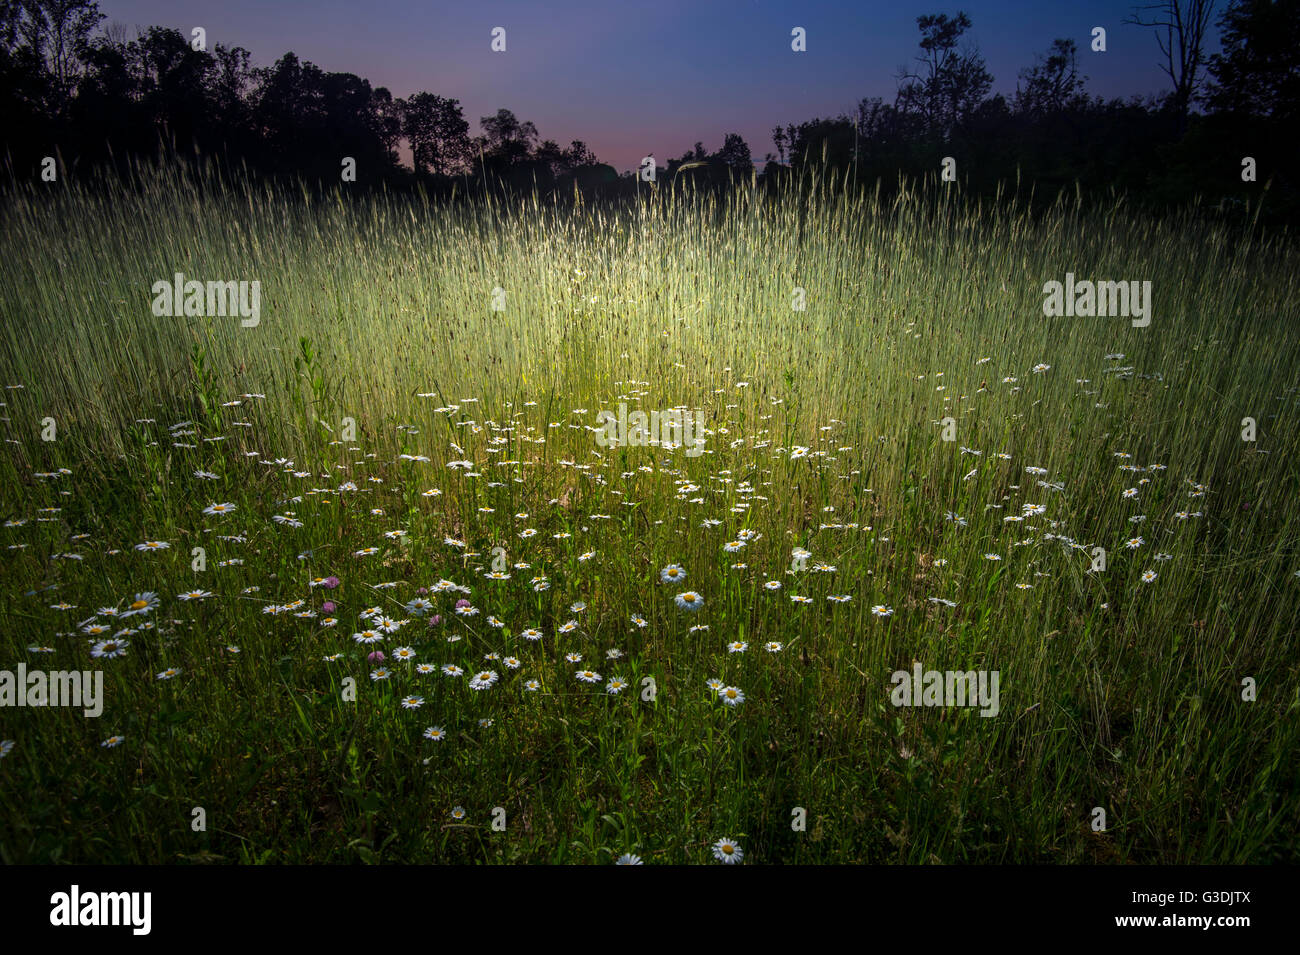 Field Of Daisy Flowers At Night Stock Photo